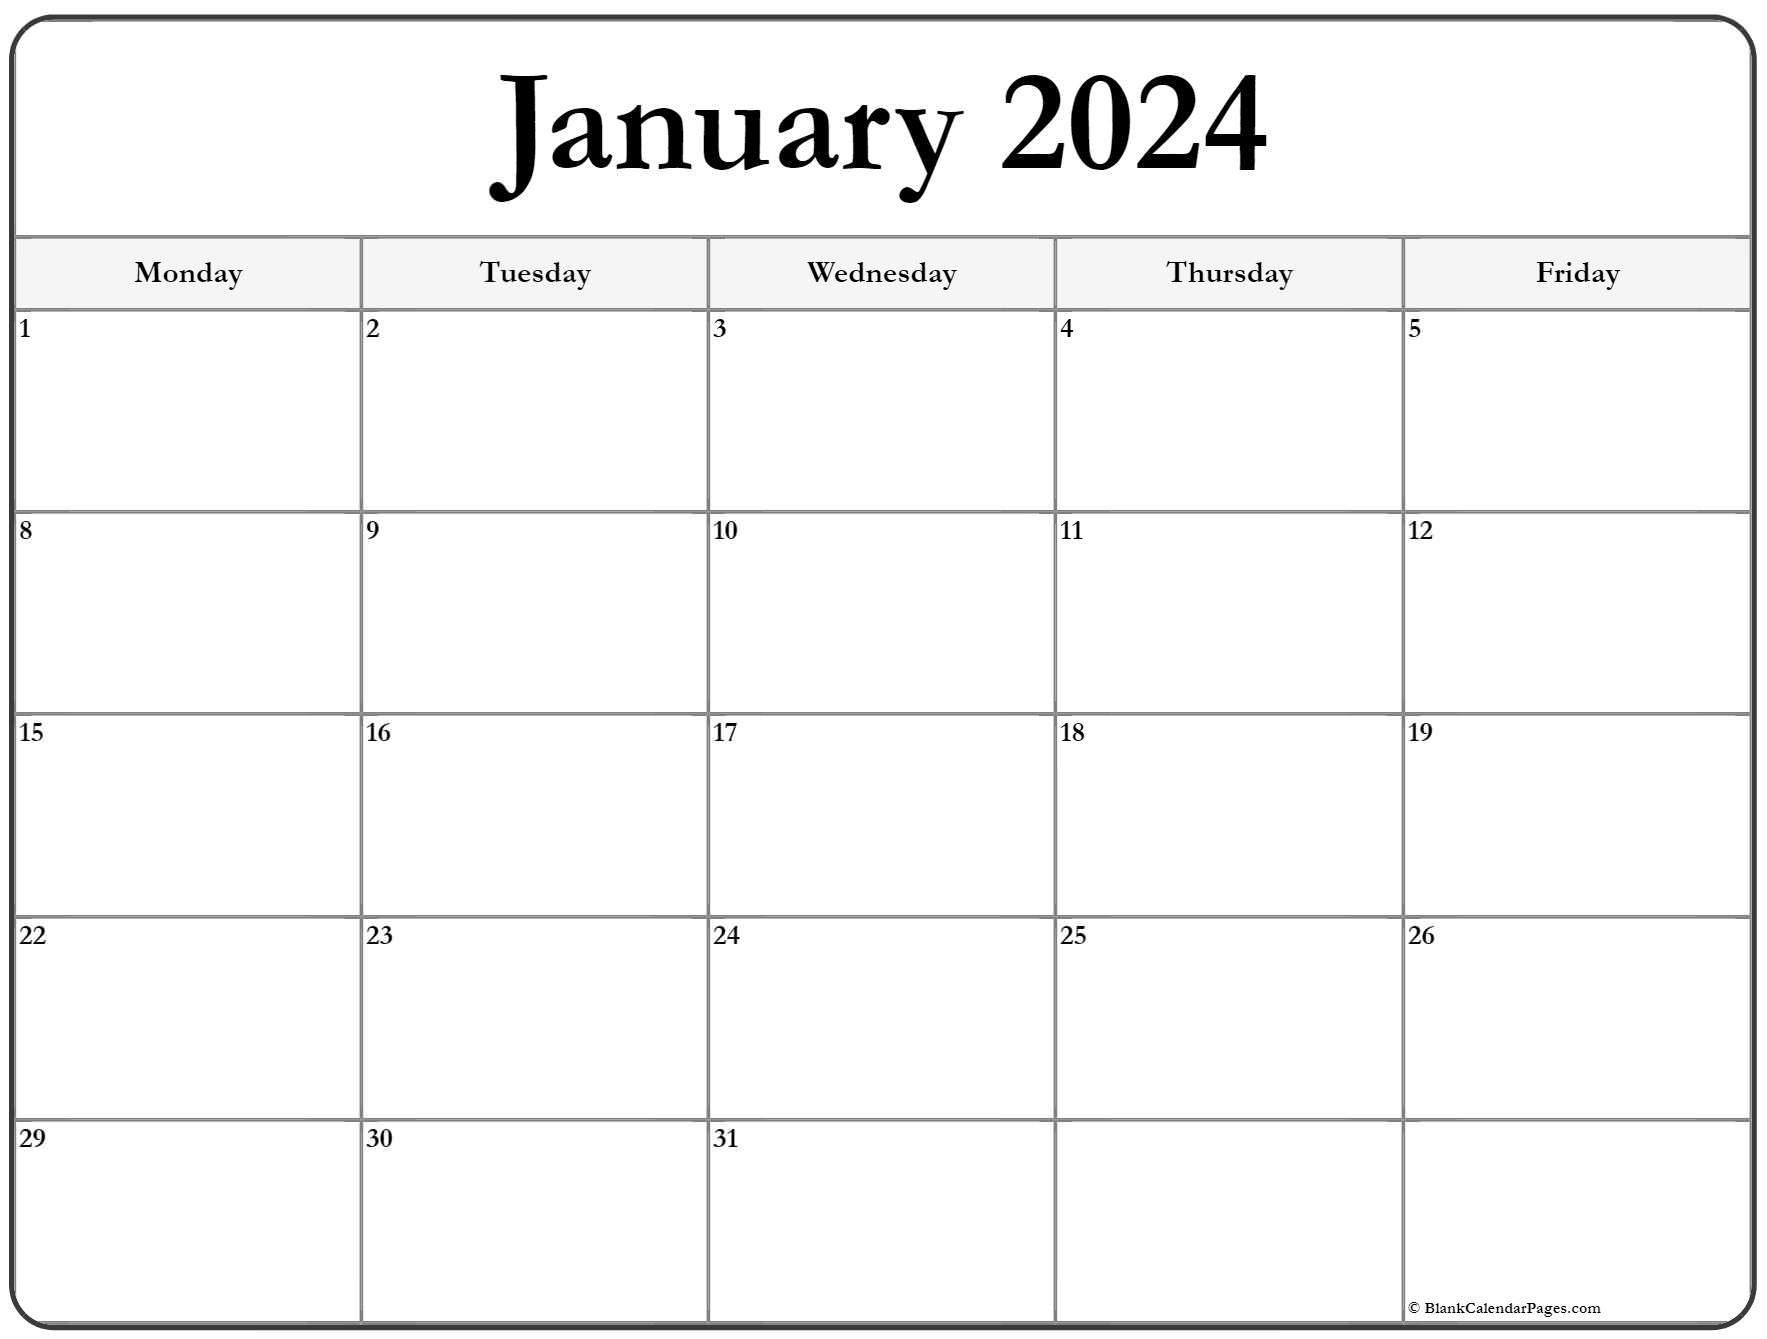 simple calendar 2024 weeks start on monday vector image january 2024